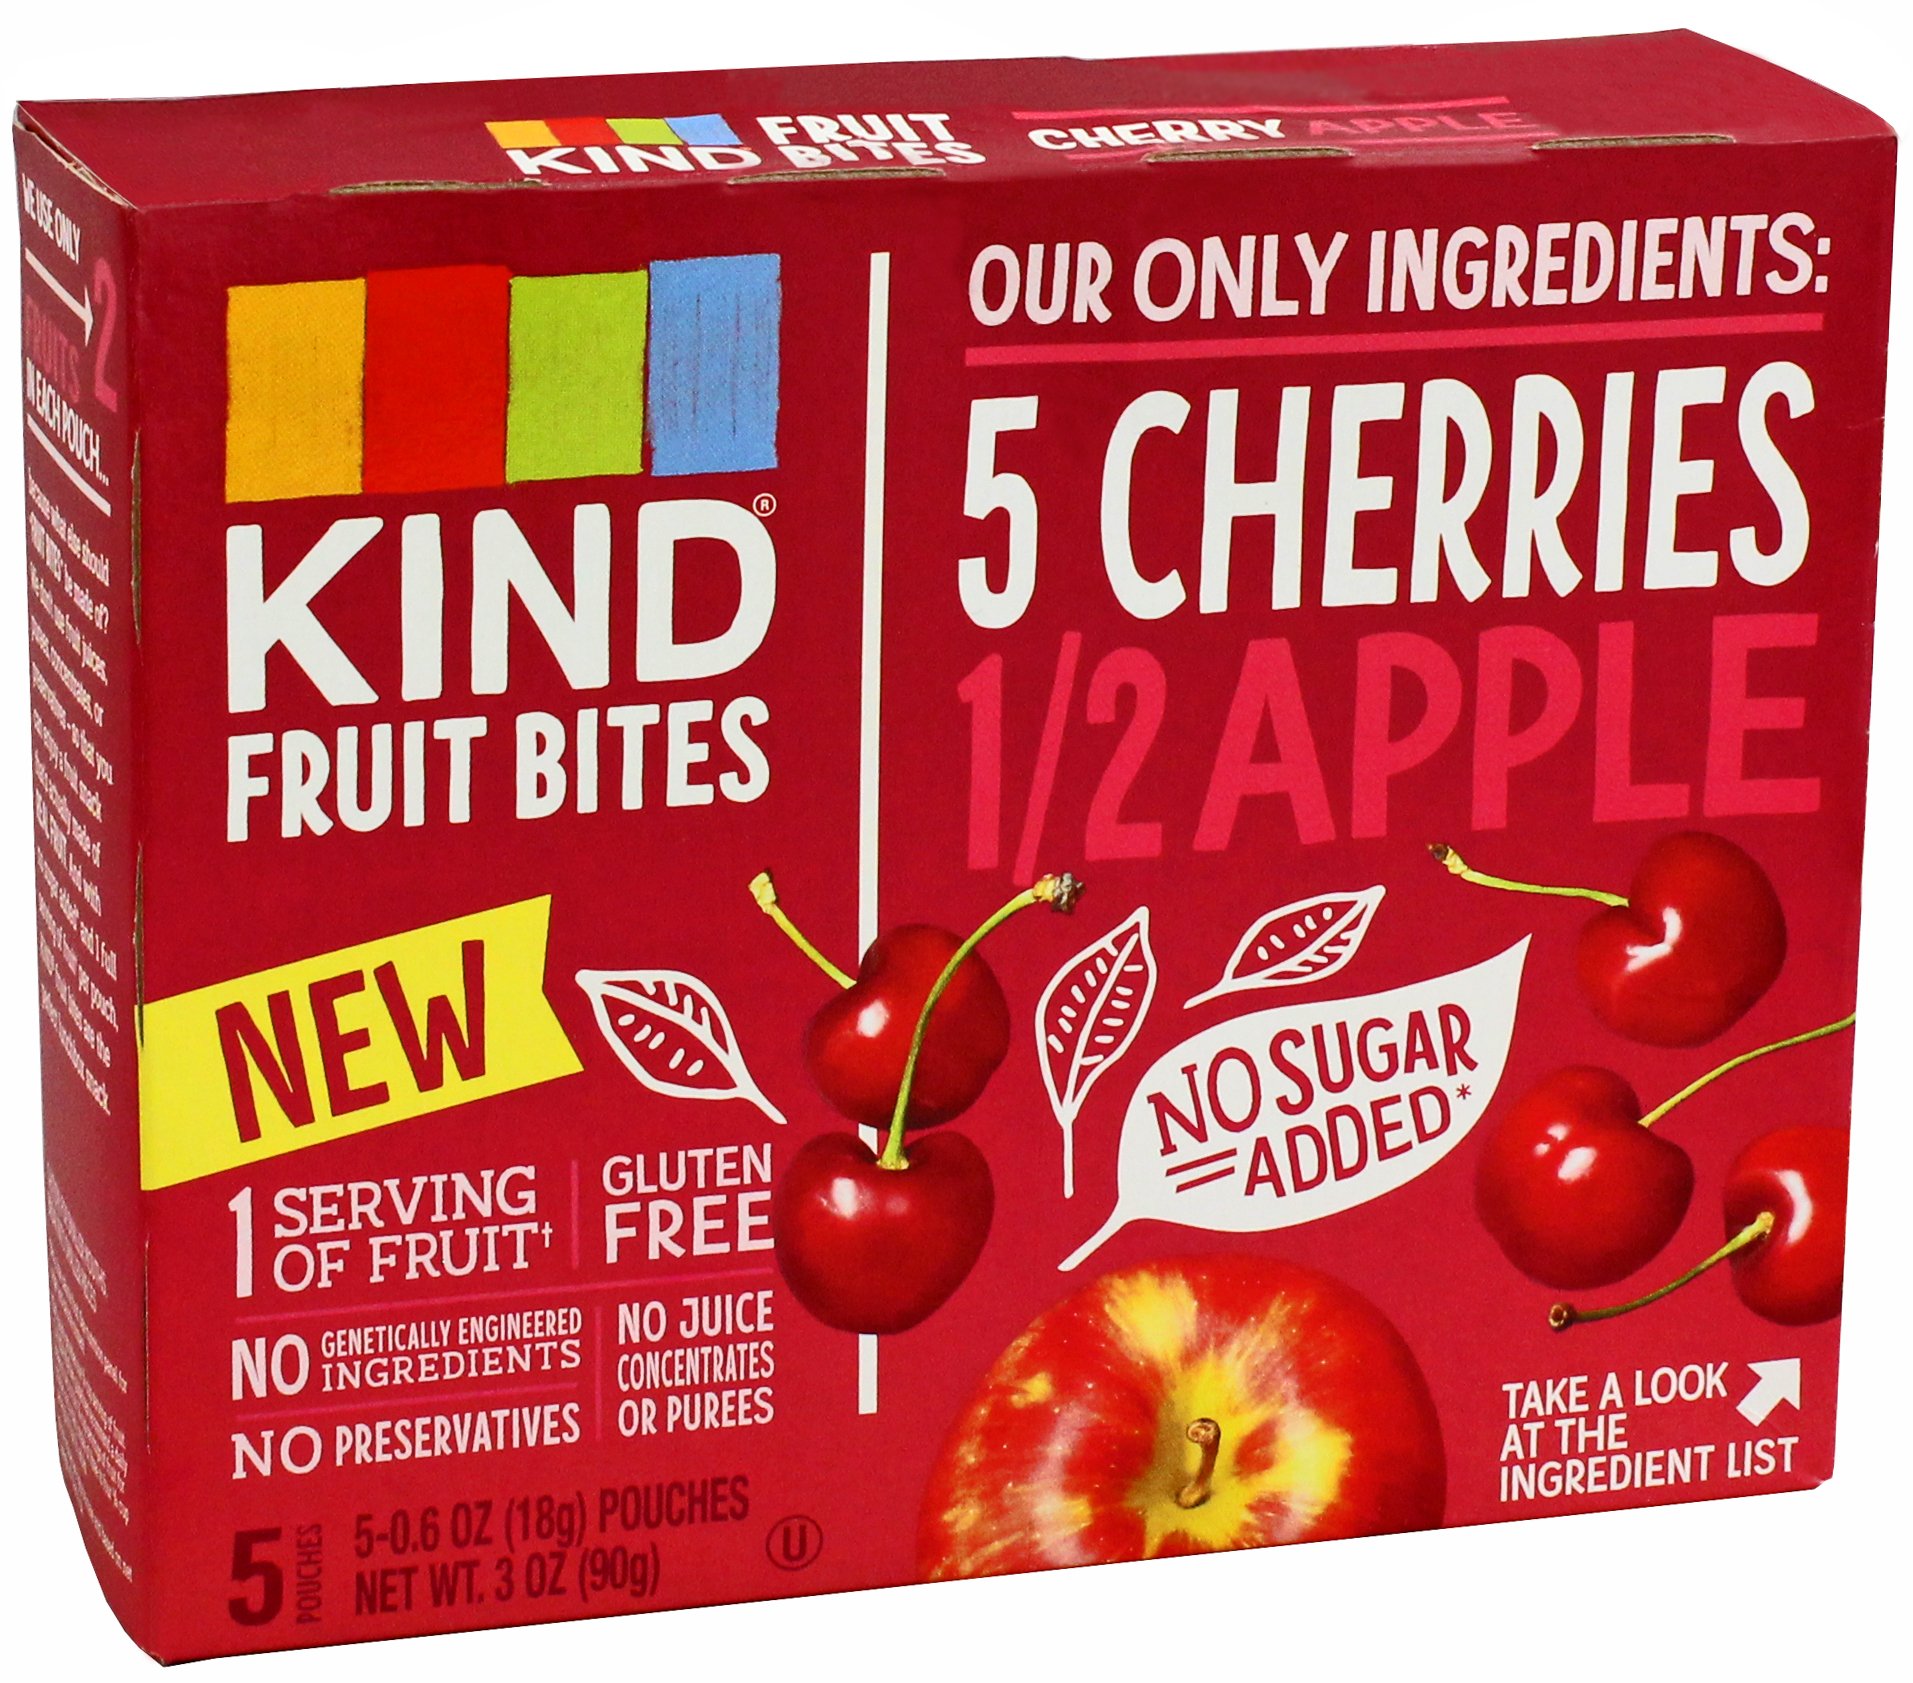 Kind Fruit Bites Cherry Apple Snacks at H-E-B - Shop Fruit